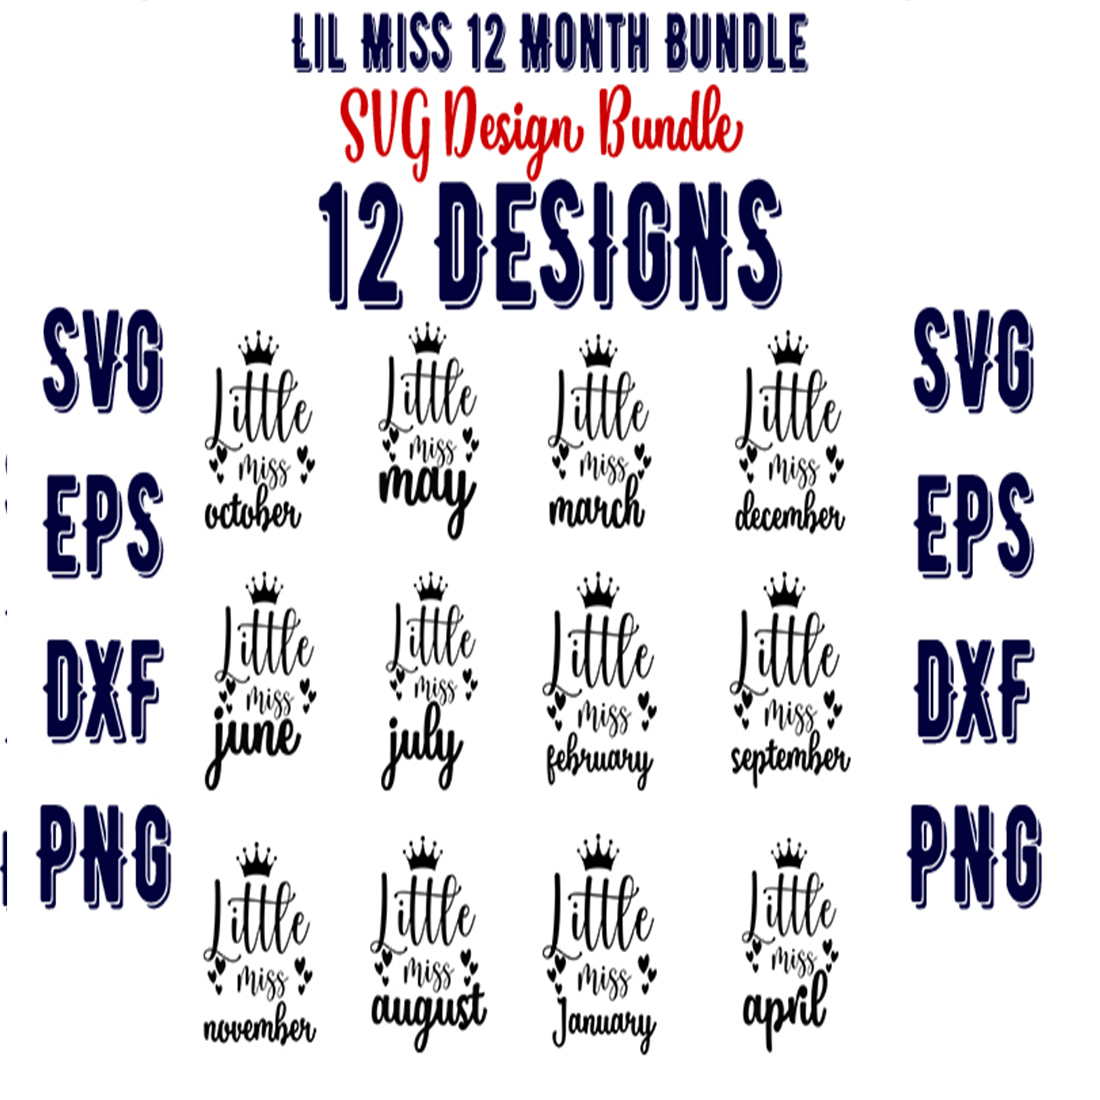 Little miss 12 month bundle svg designs.